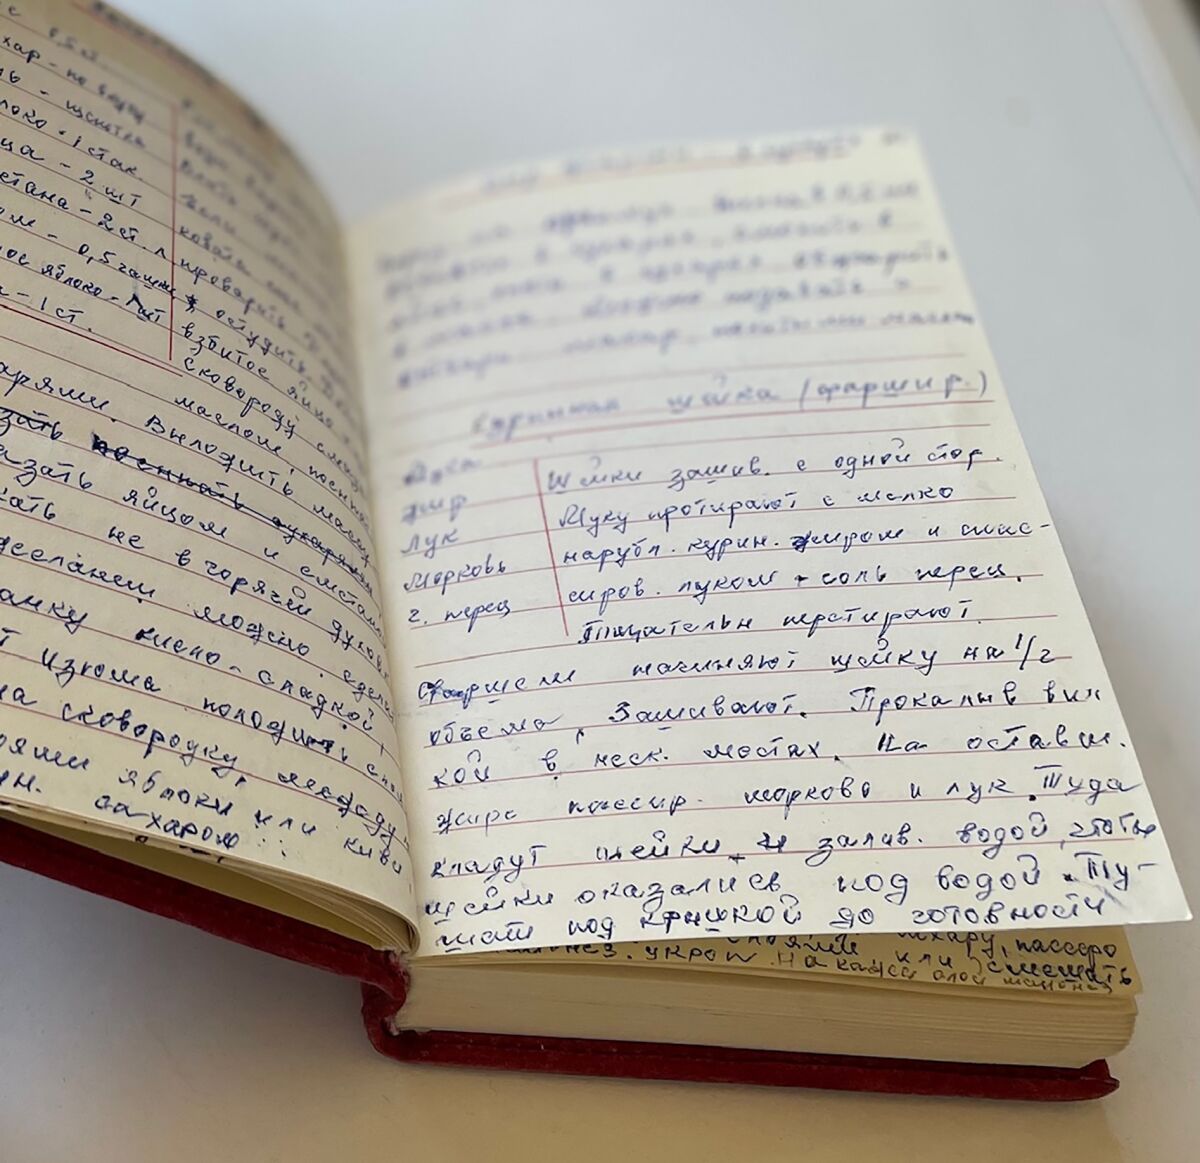 Handwritten recipes in a red-bound notebook 